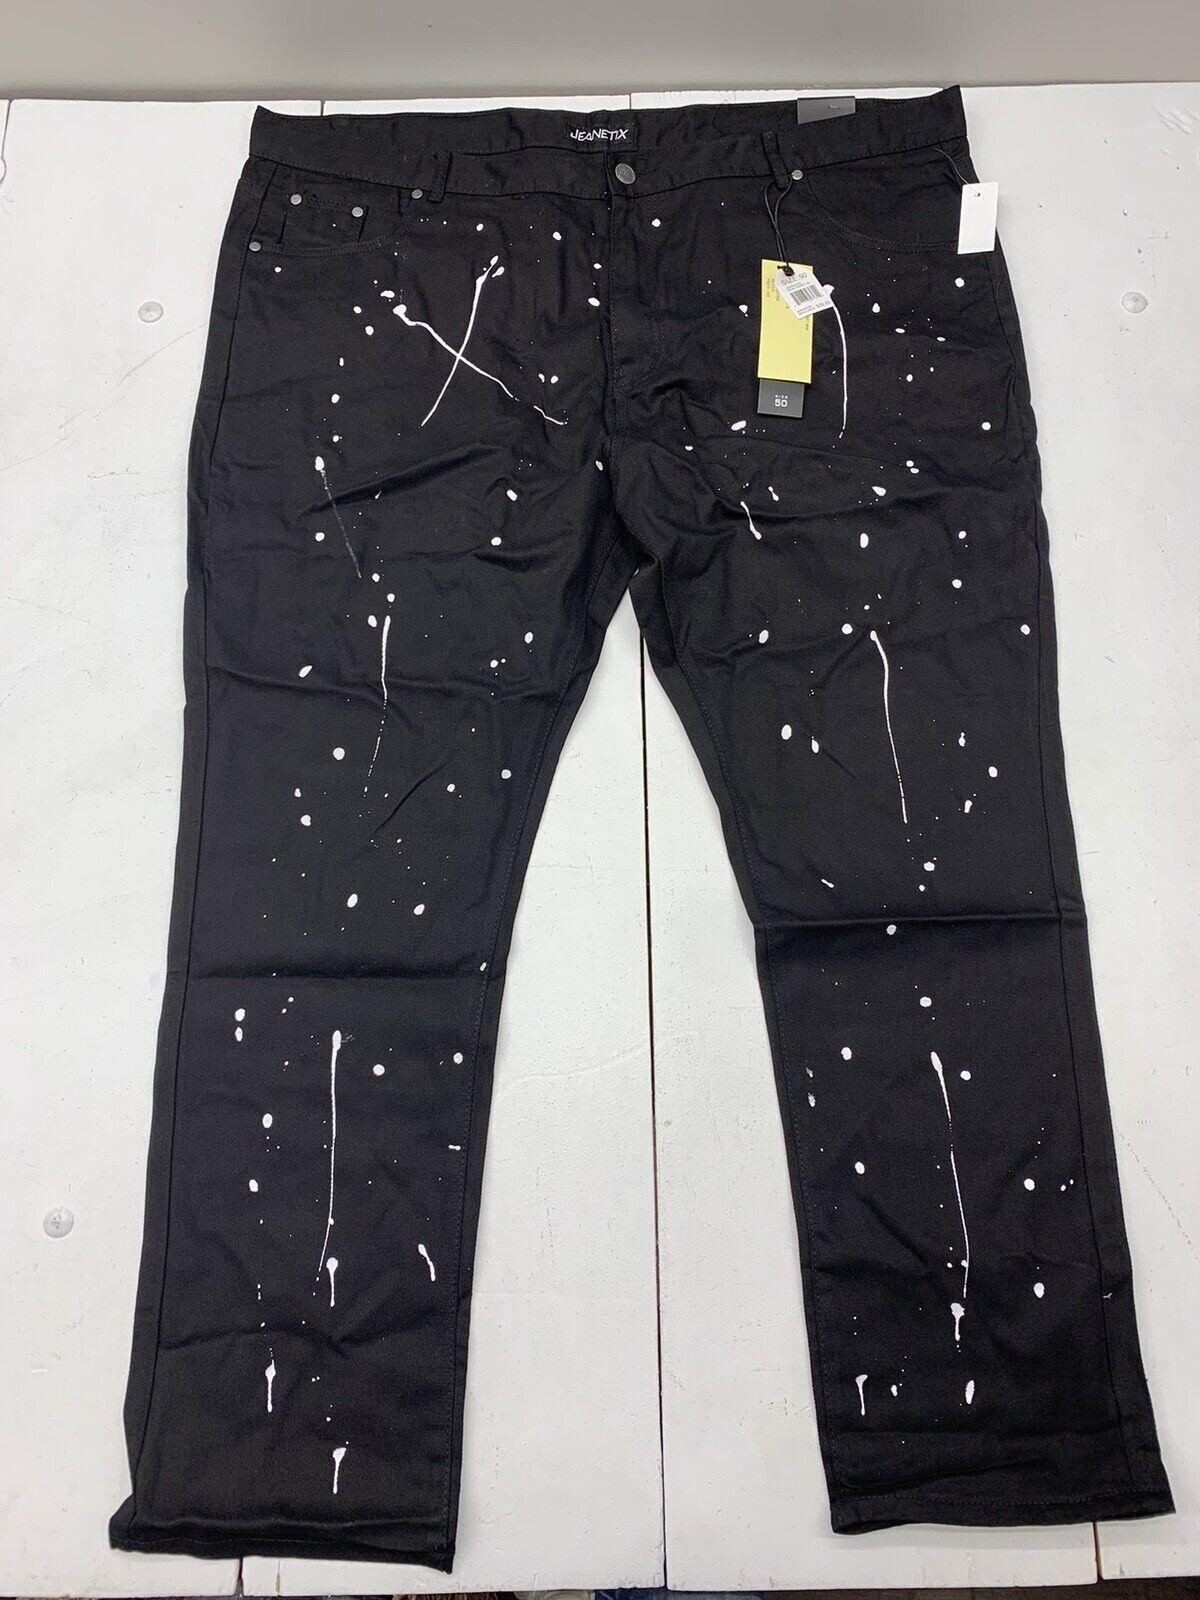 Jeanetix Mens Black Paint Splatter Jeans Size 50 - beyond exchange